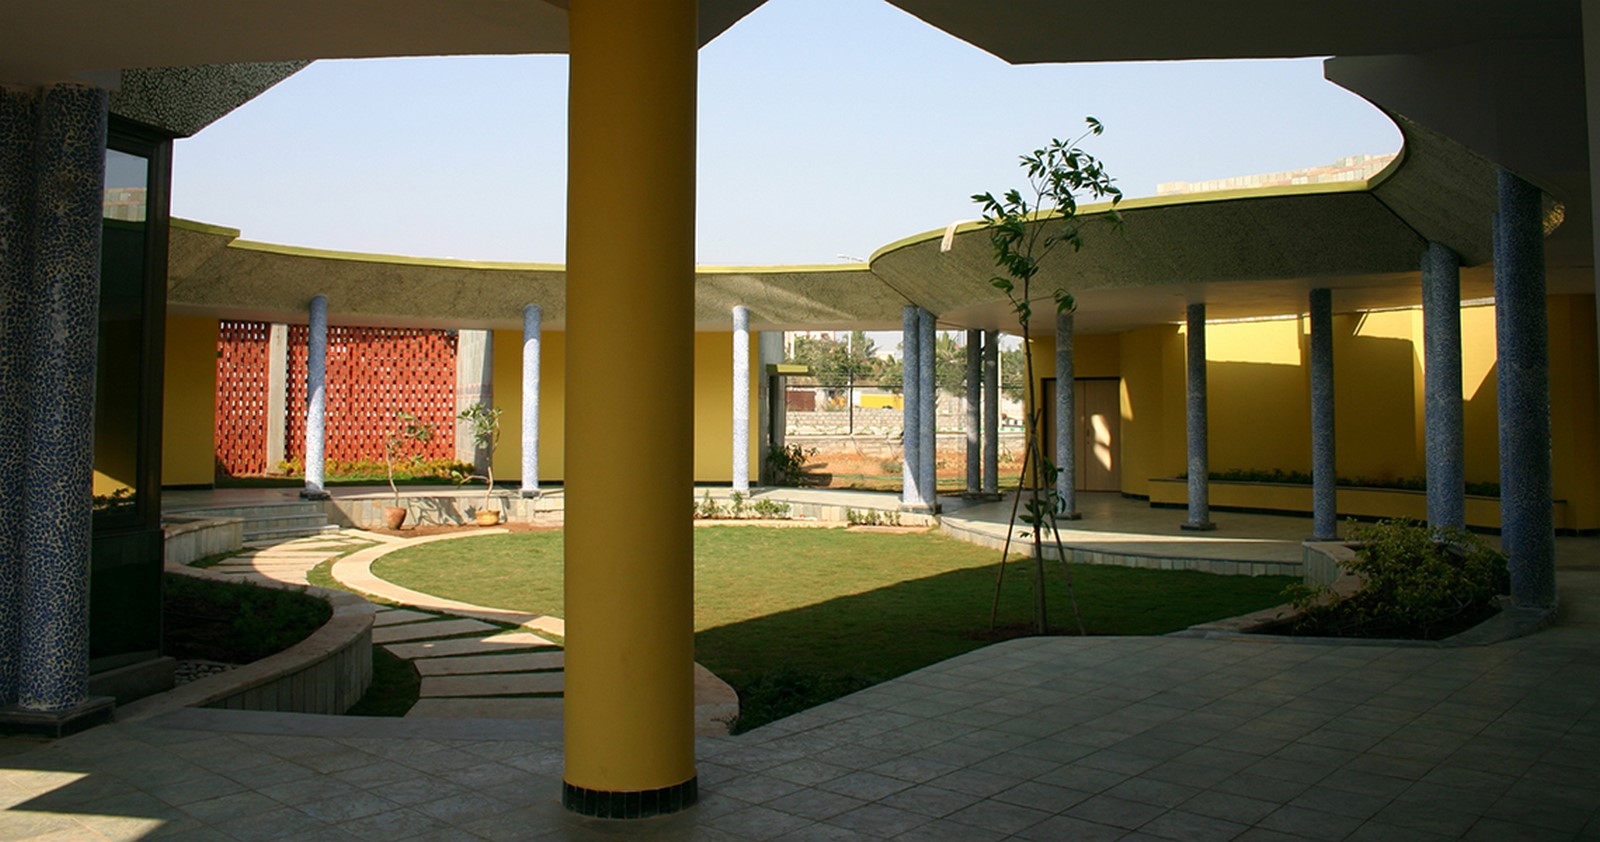 CII-Sohrabji Godrej Green Business Centre by Karan Grover and